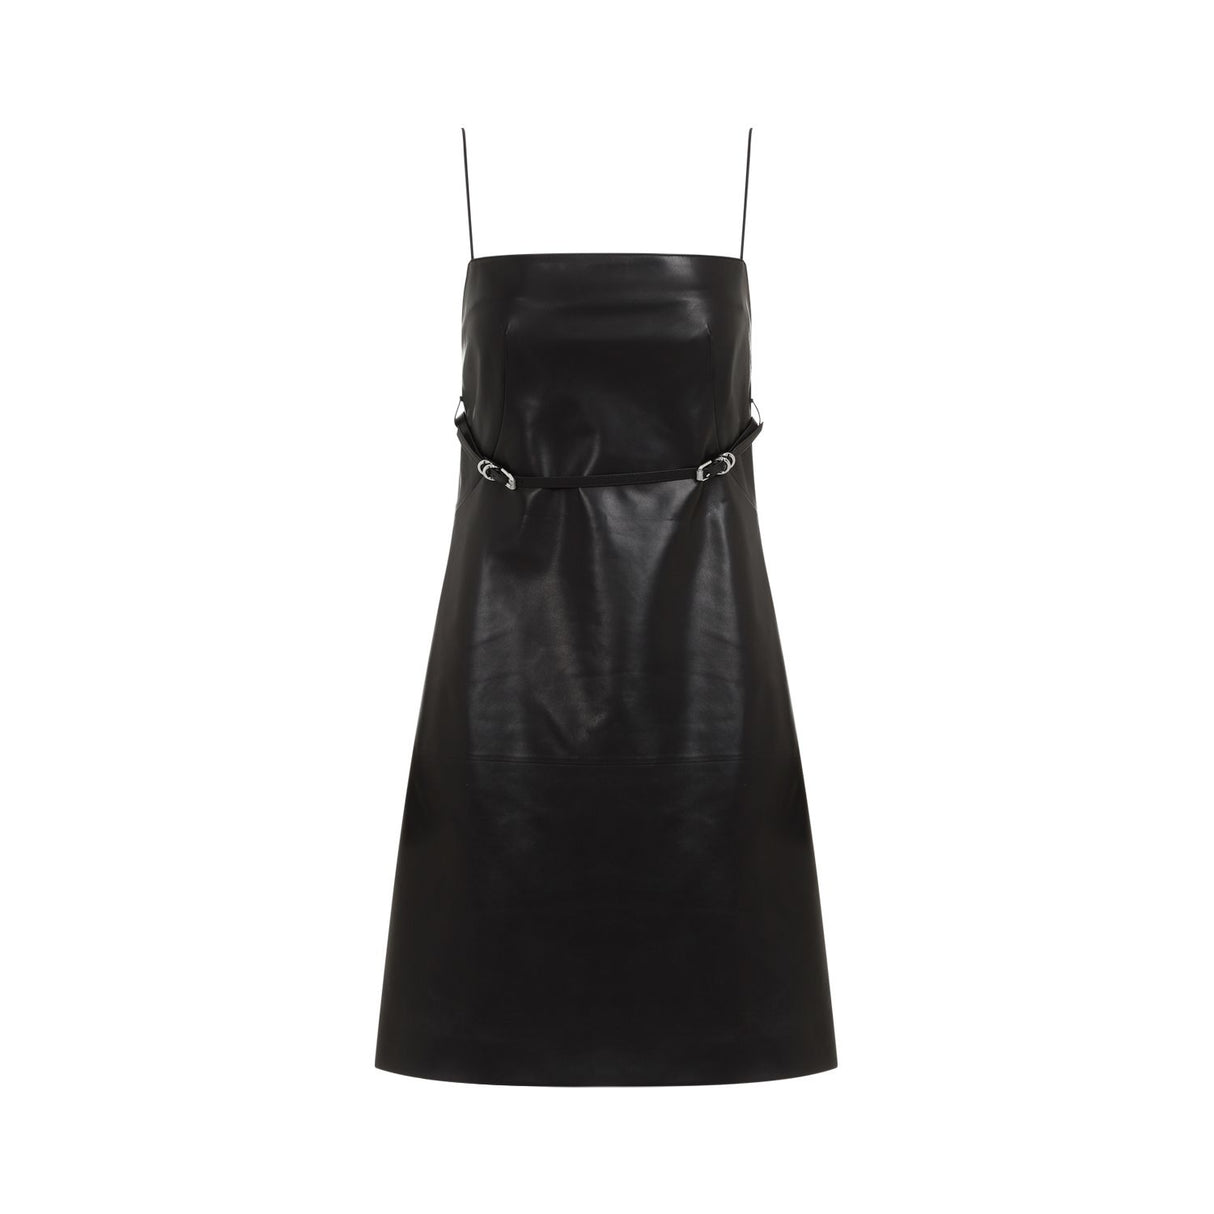 GIVENCHY Sleek and Edgy Black Leather Mini Dress